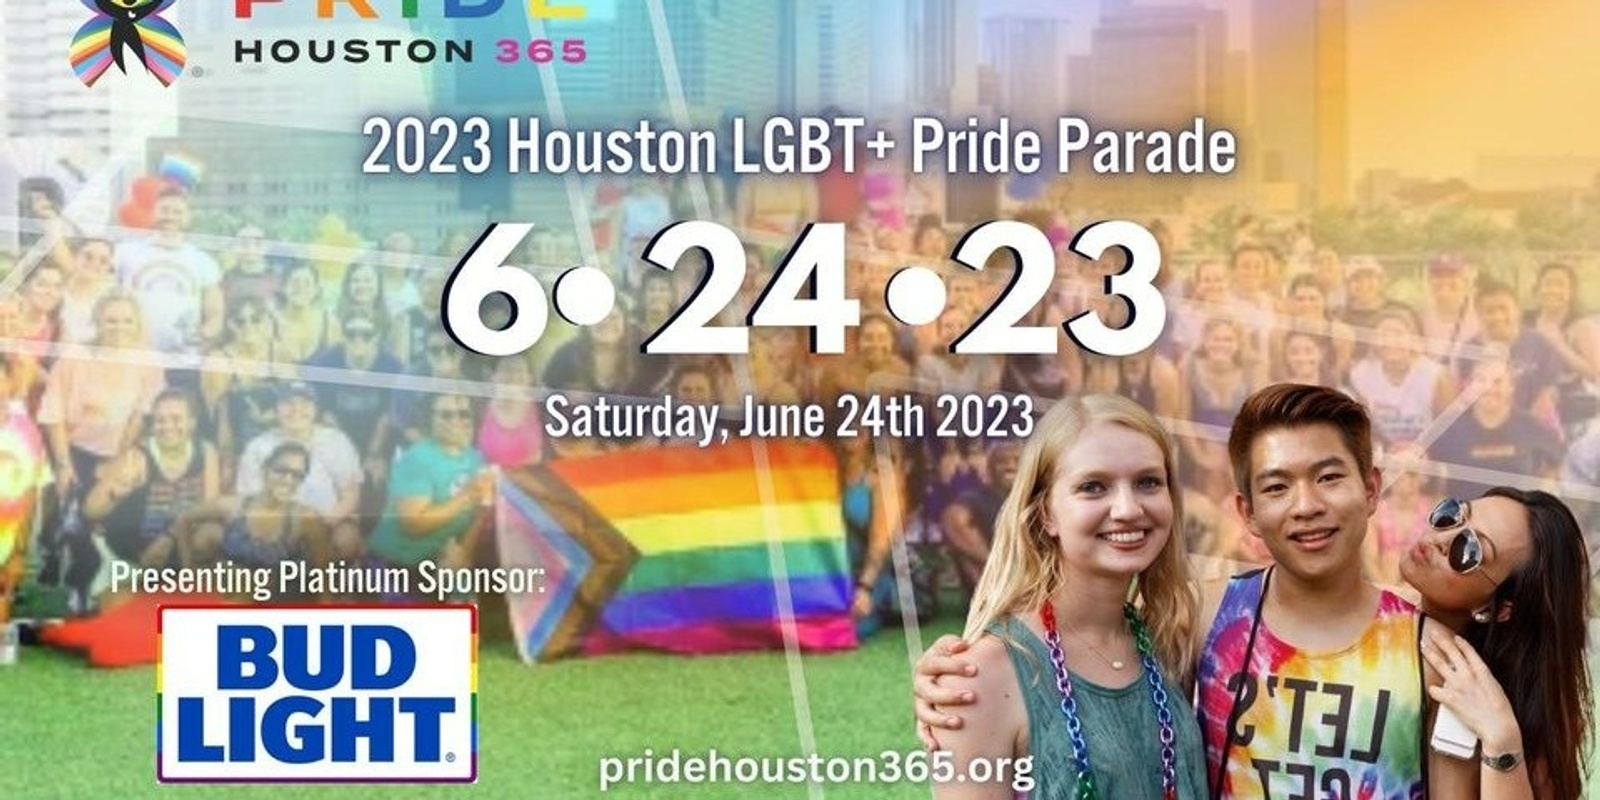 Pride Houston's banner